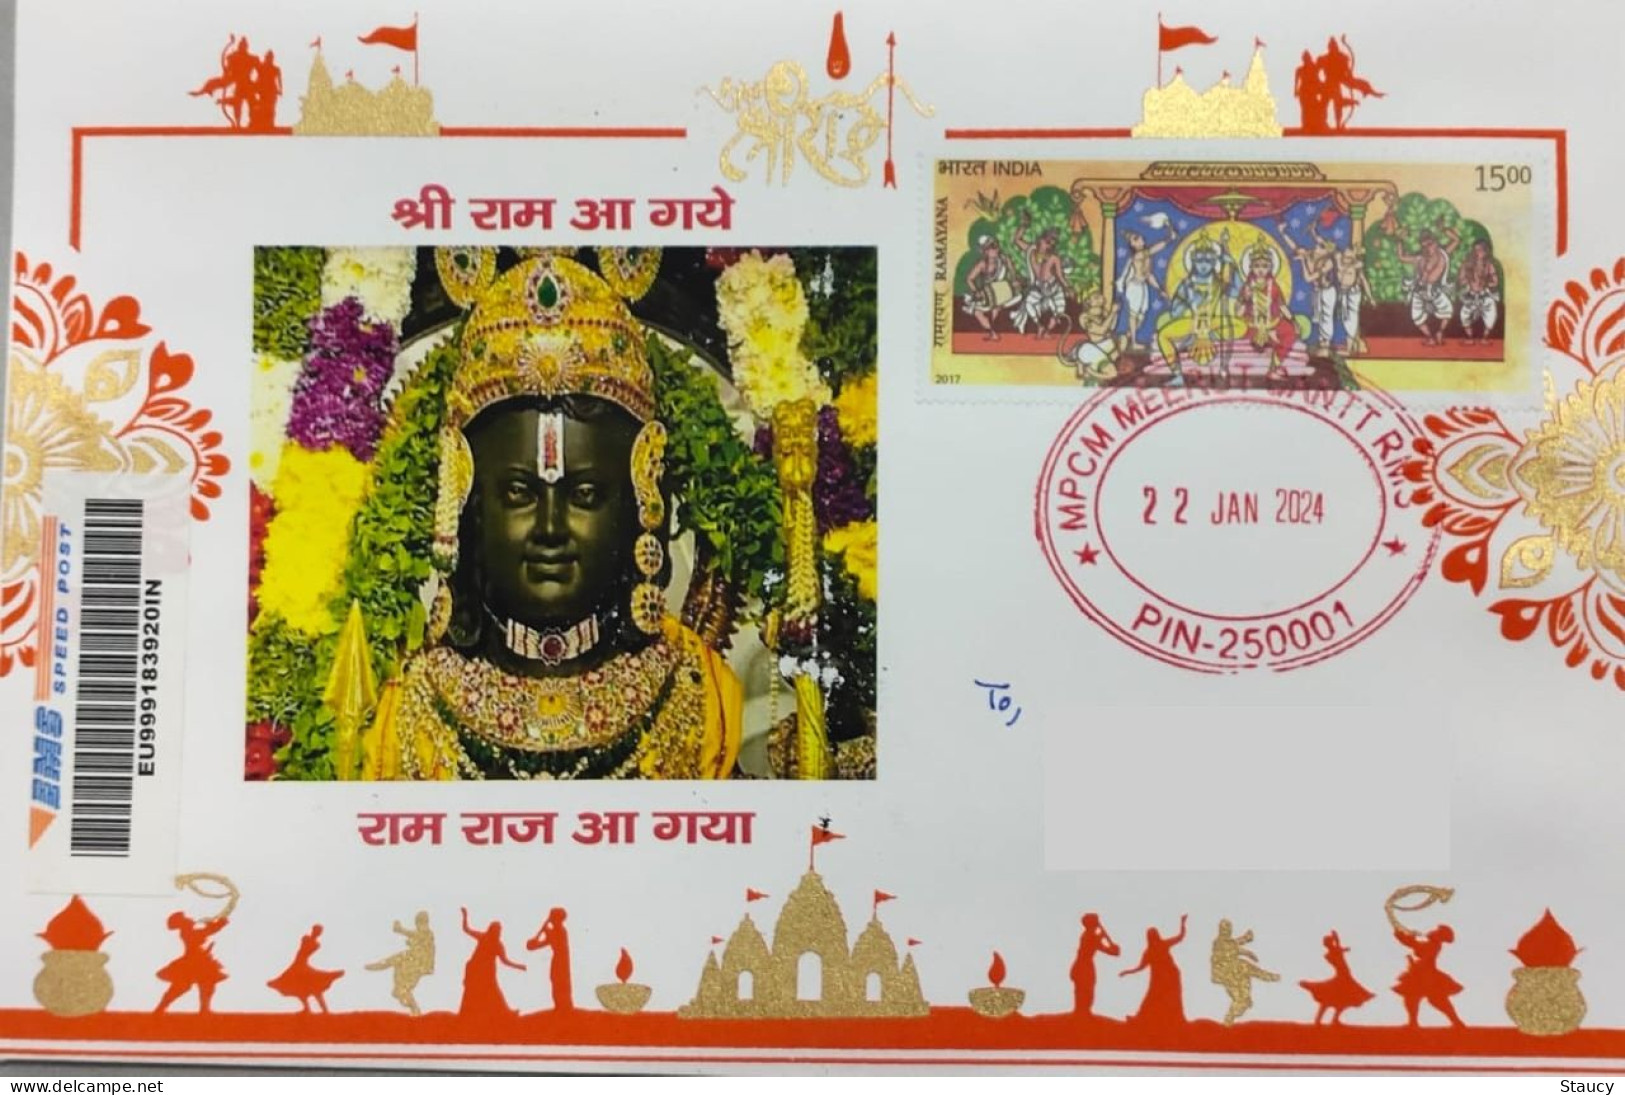 India 22.01.2024 Ram Mandir Pran Pratishtha Special Registered Postal Used Cover With Tracking (address Hidden) Per Scan - Hinduism